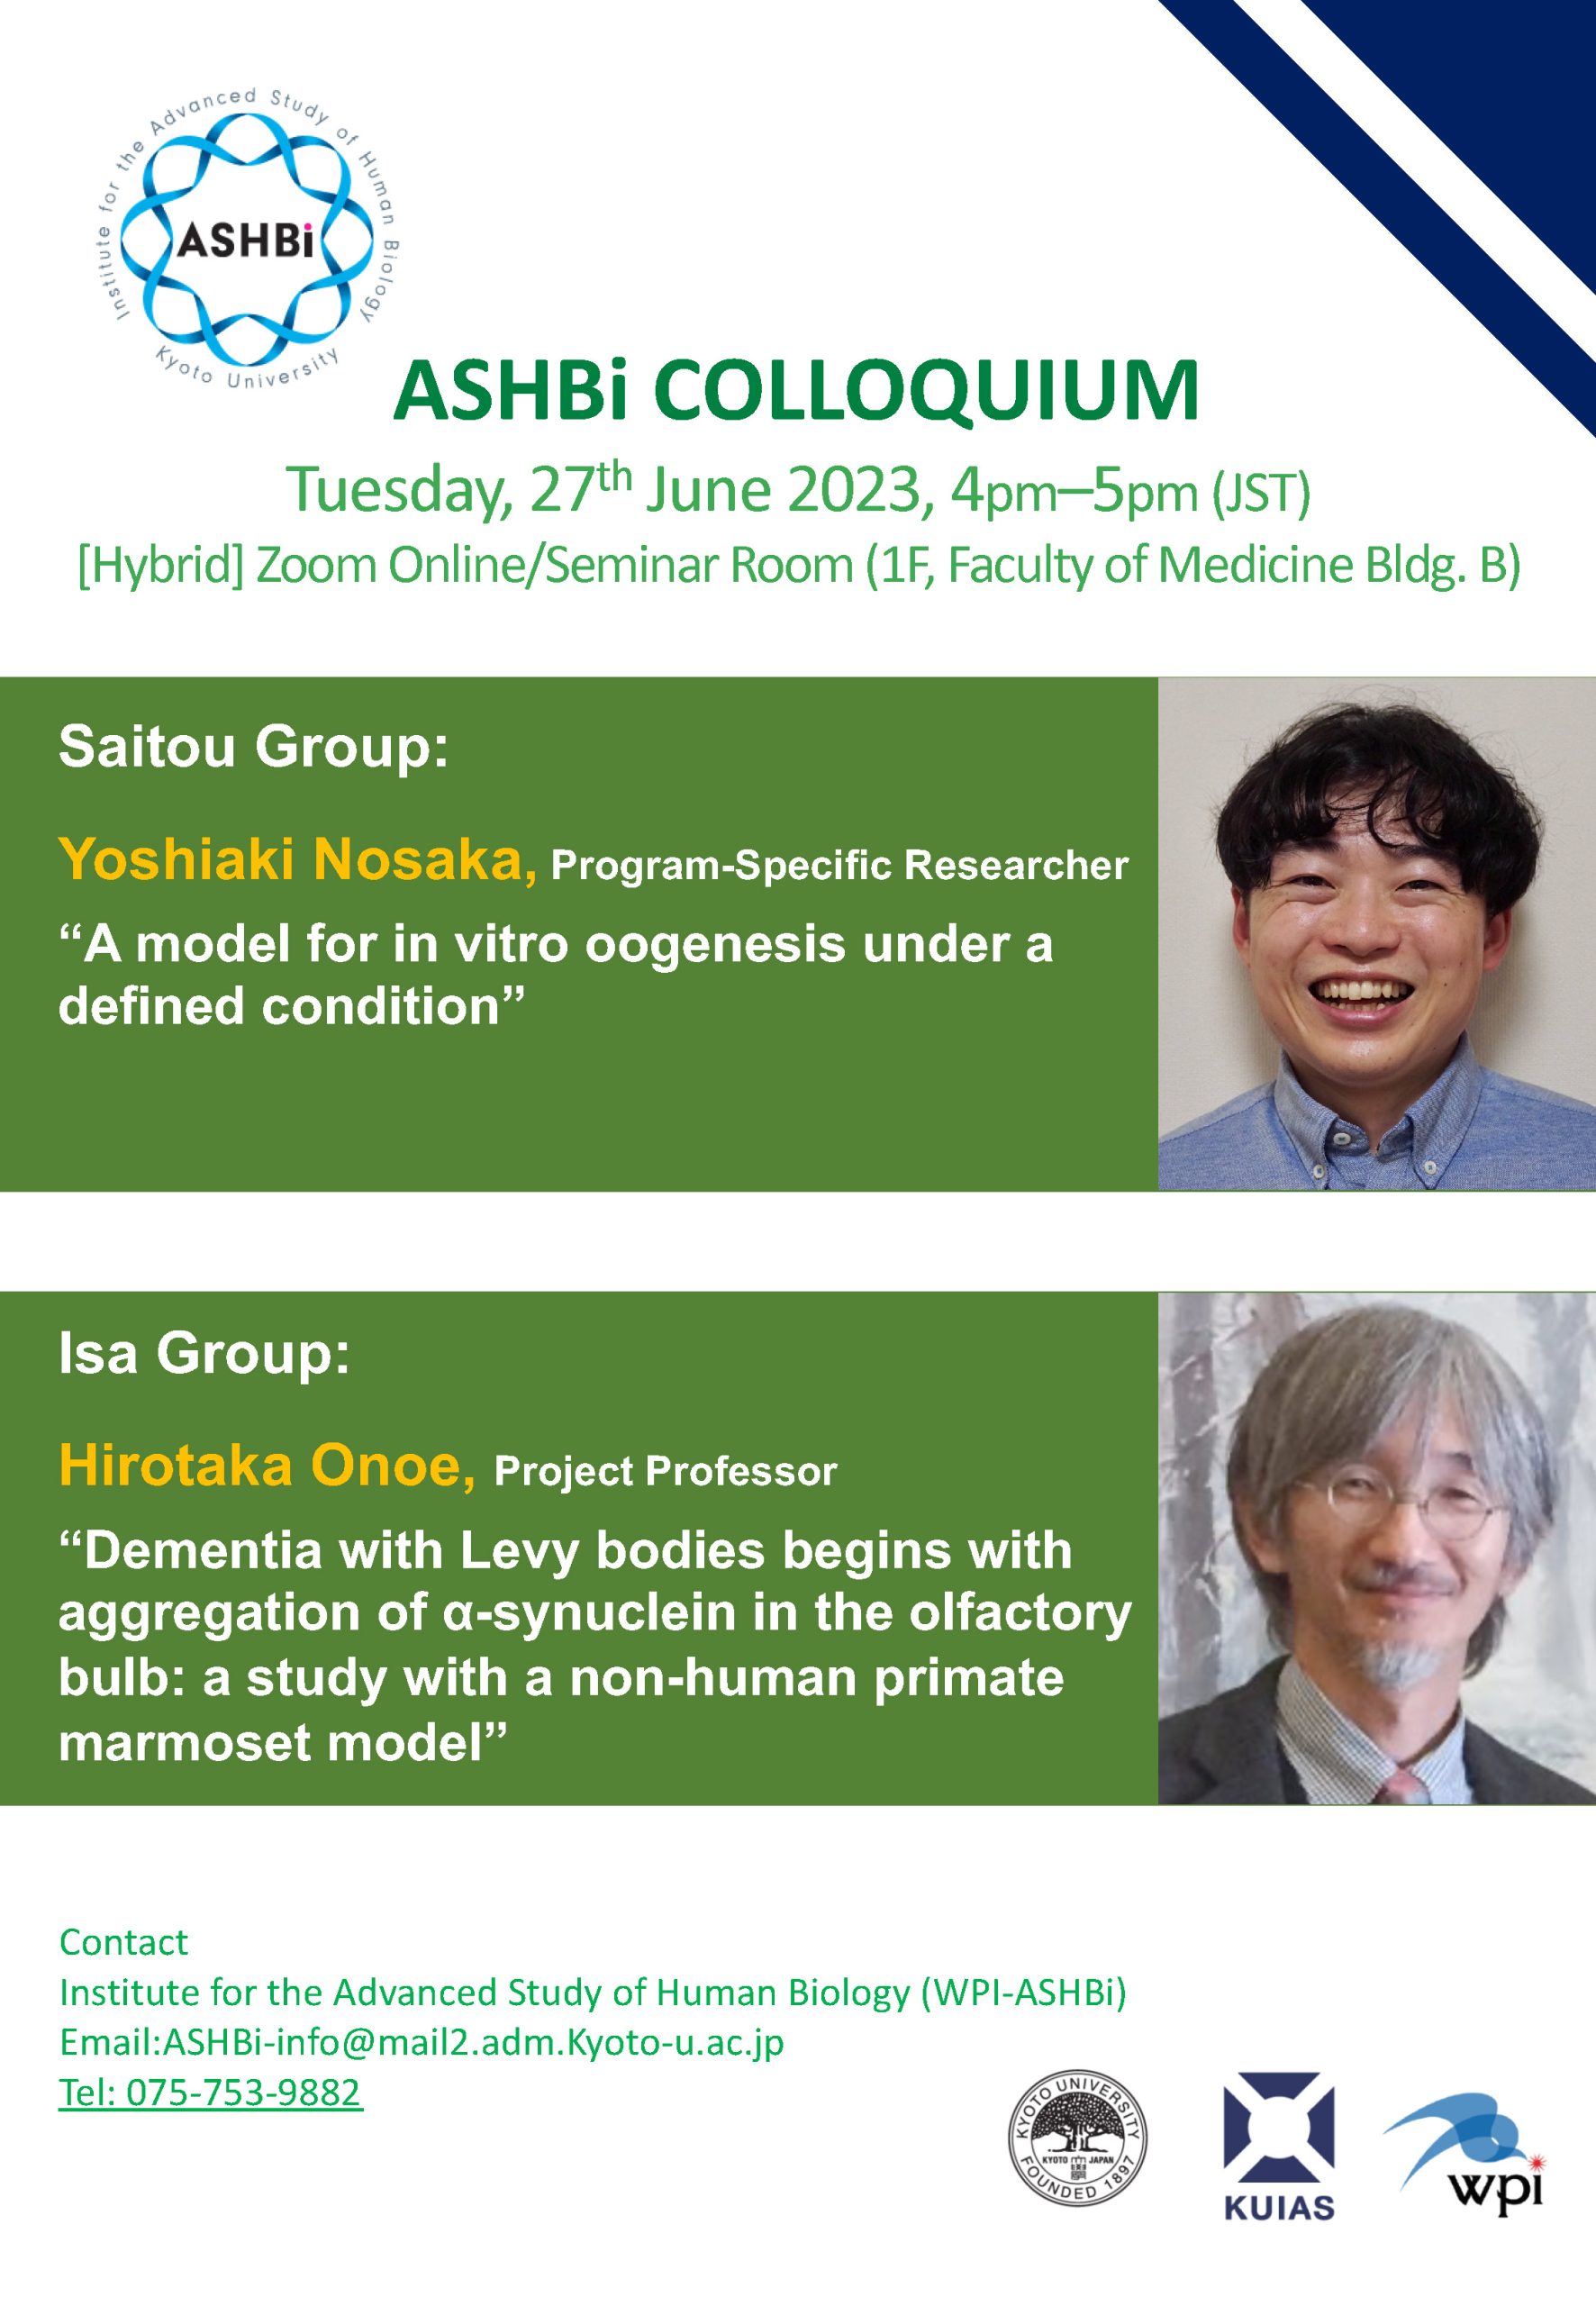 35th ASHBi Colloquium(Saitou Group & Isa Group)